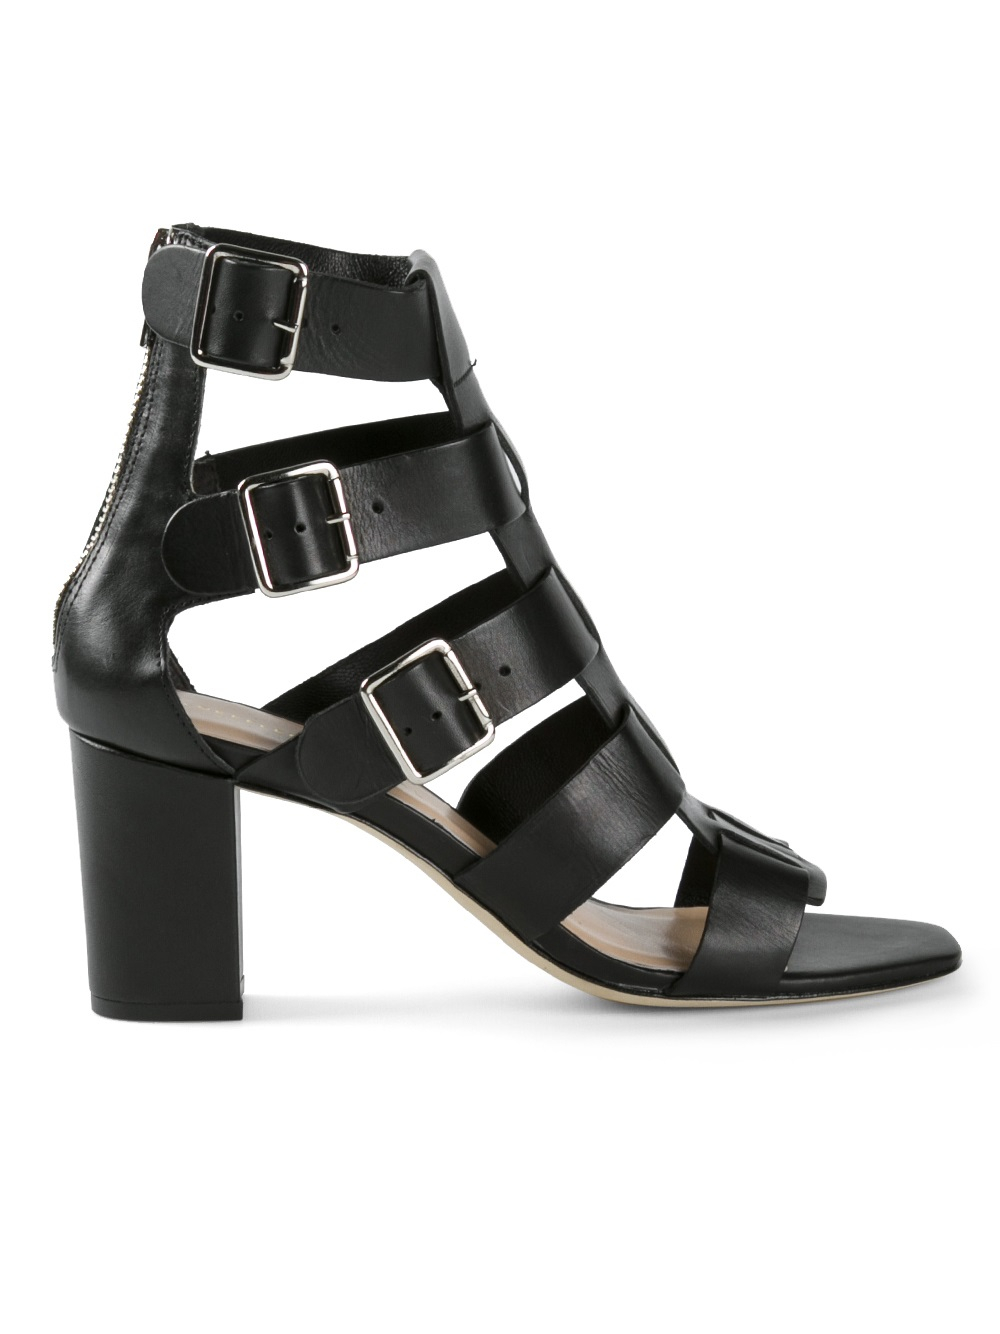 Lyst - Loeffler Randall 'Maia' Sandals in Black